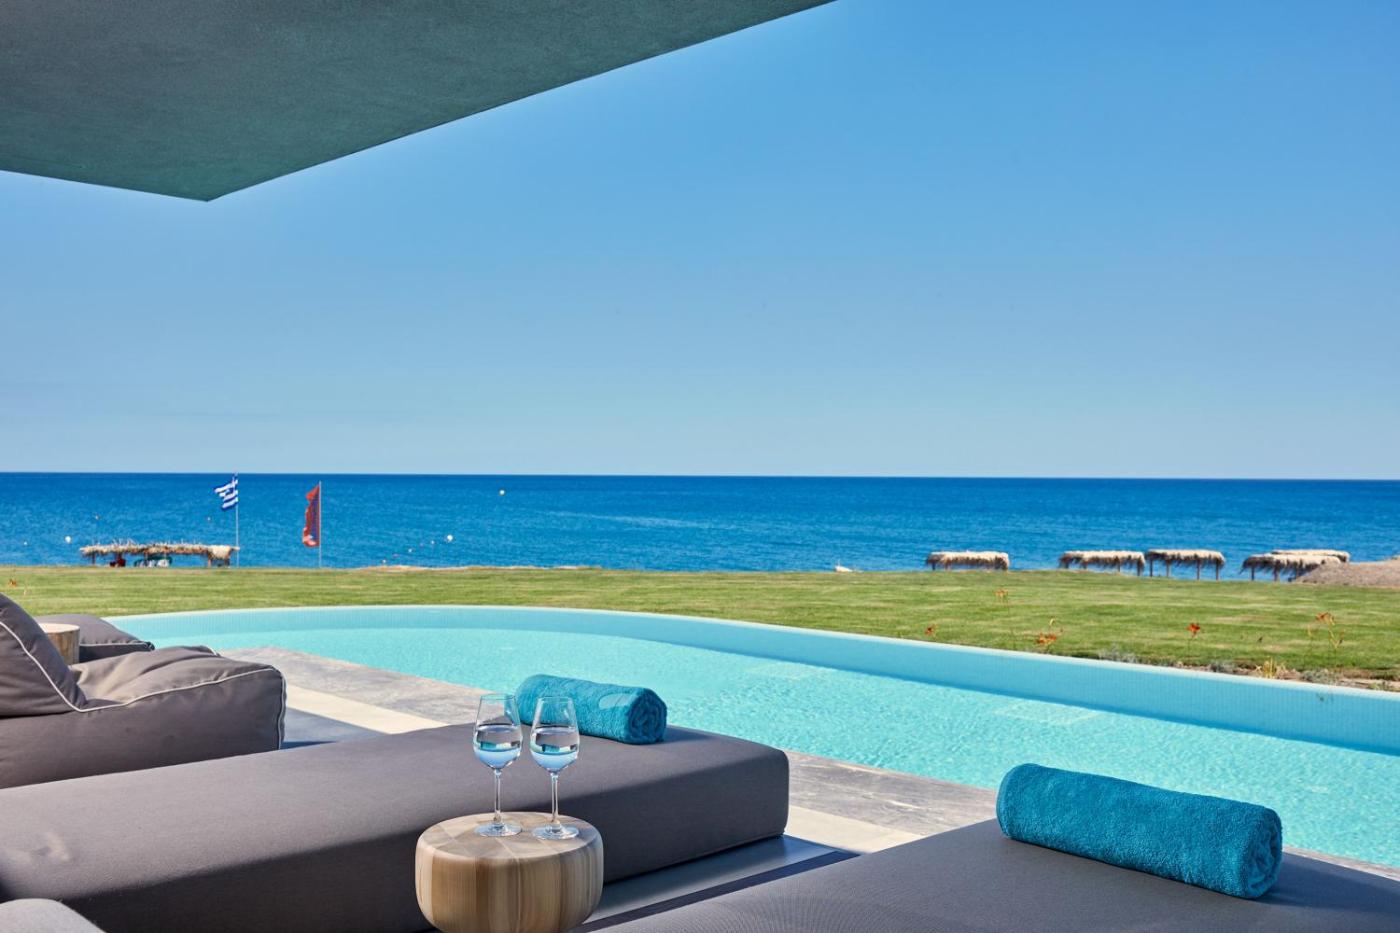 Hotel with private pool - Atlantica Dreams Resort